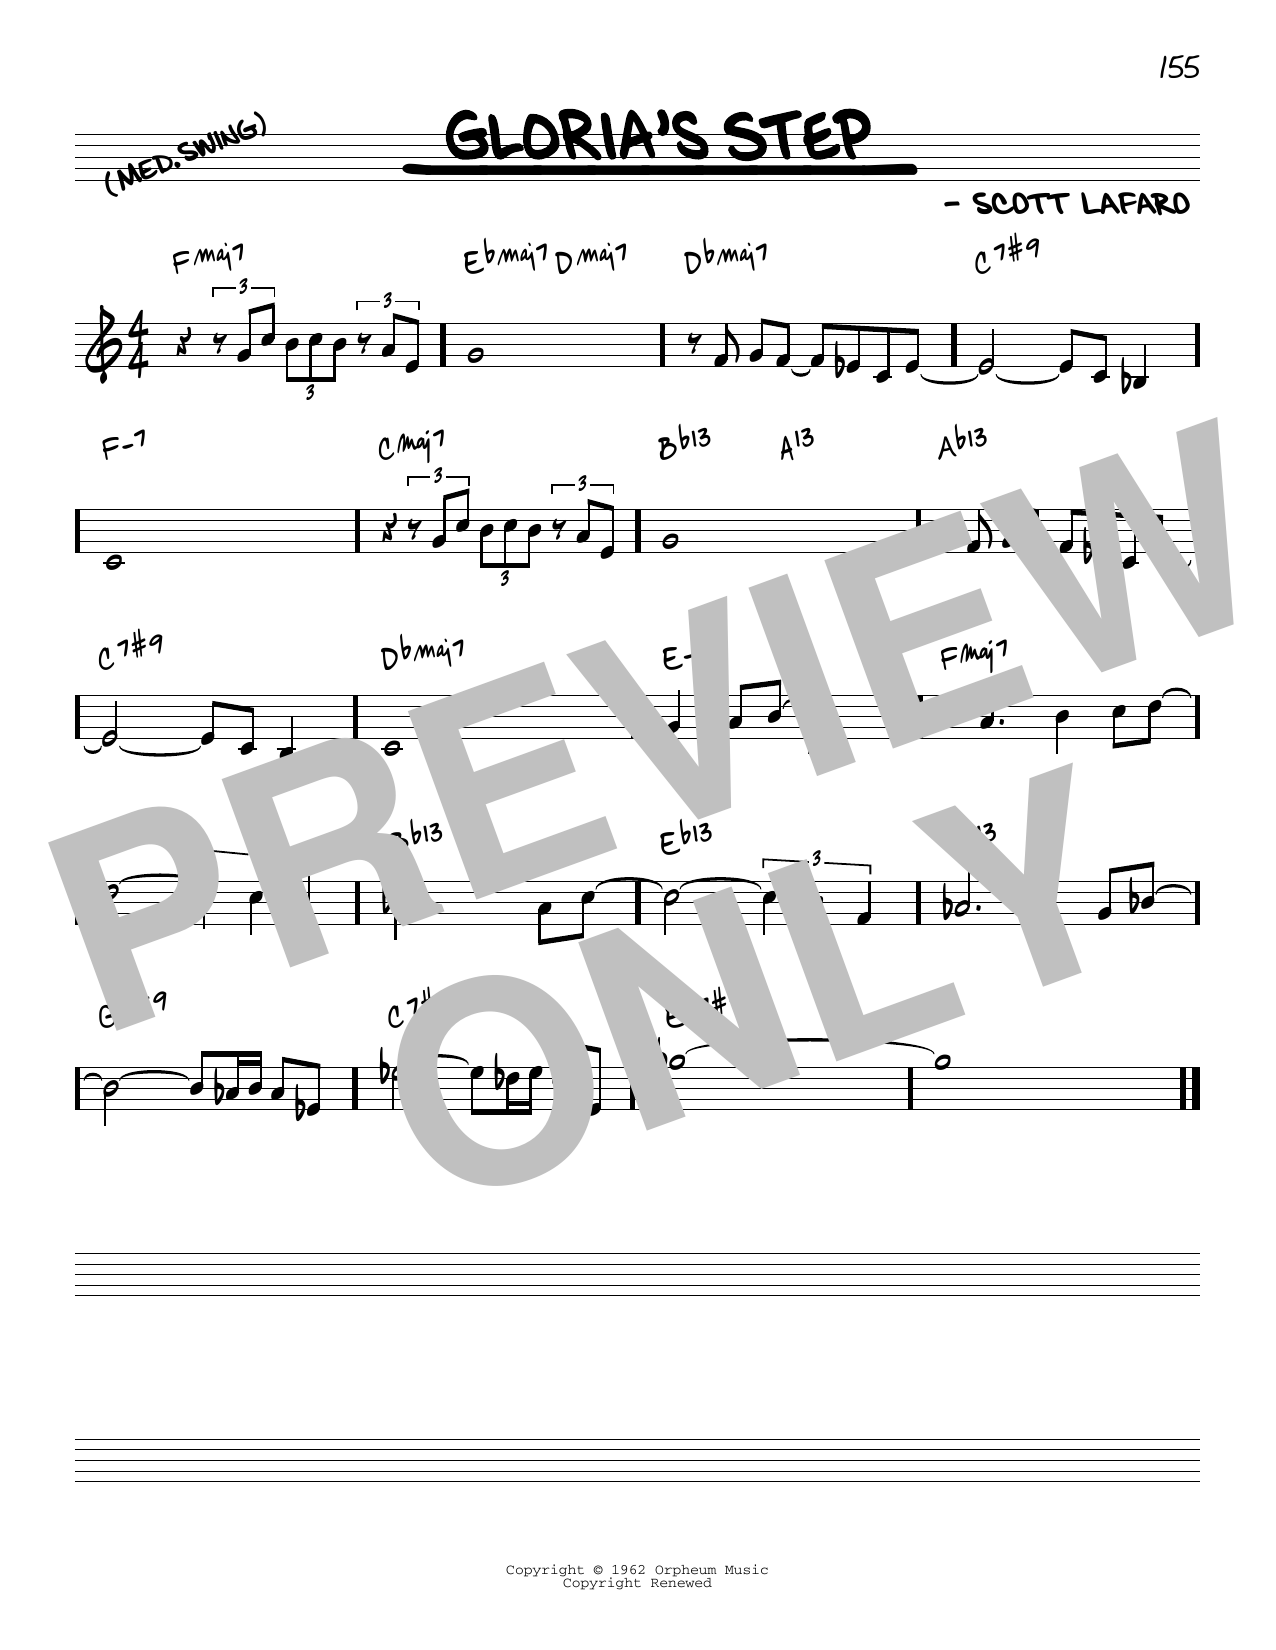 Scott LeFaro Gloria's Step [Reharmonized version] (arr. Jack Grassel) Sheet Music Notes & Chords for Real Book – Melody & Chords - Download or Print PDF